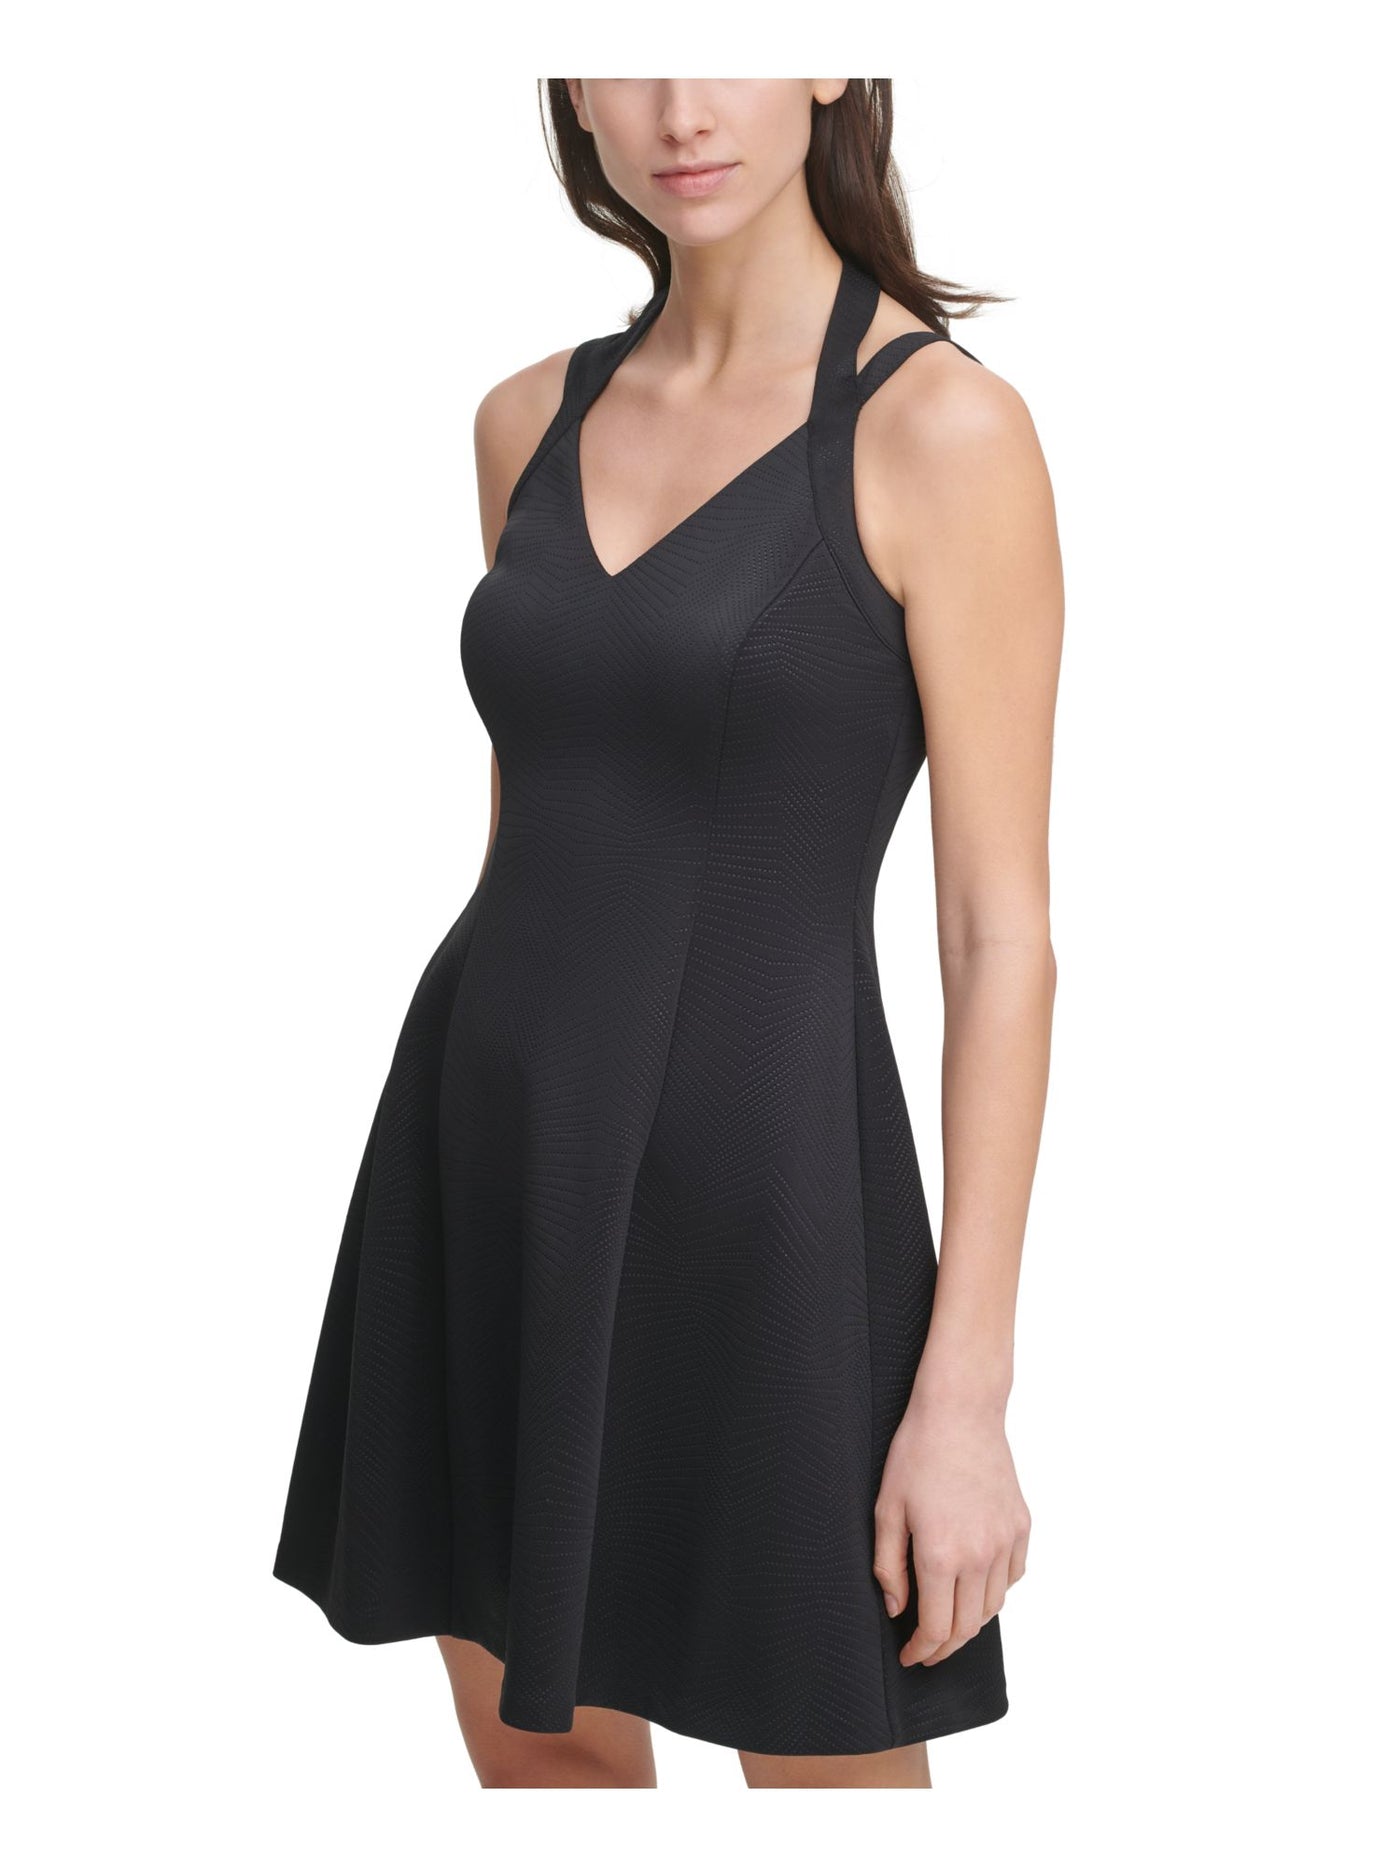 GUESS Womens Black Zippered Lined Sleeveless Halter Short Fit + Flare Dress 6